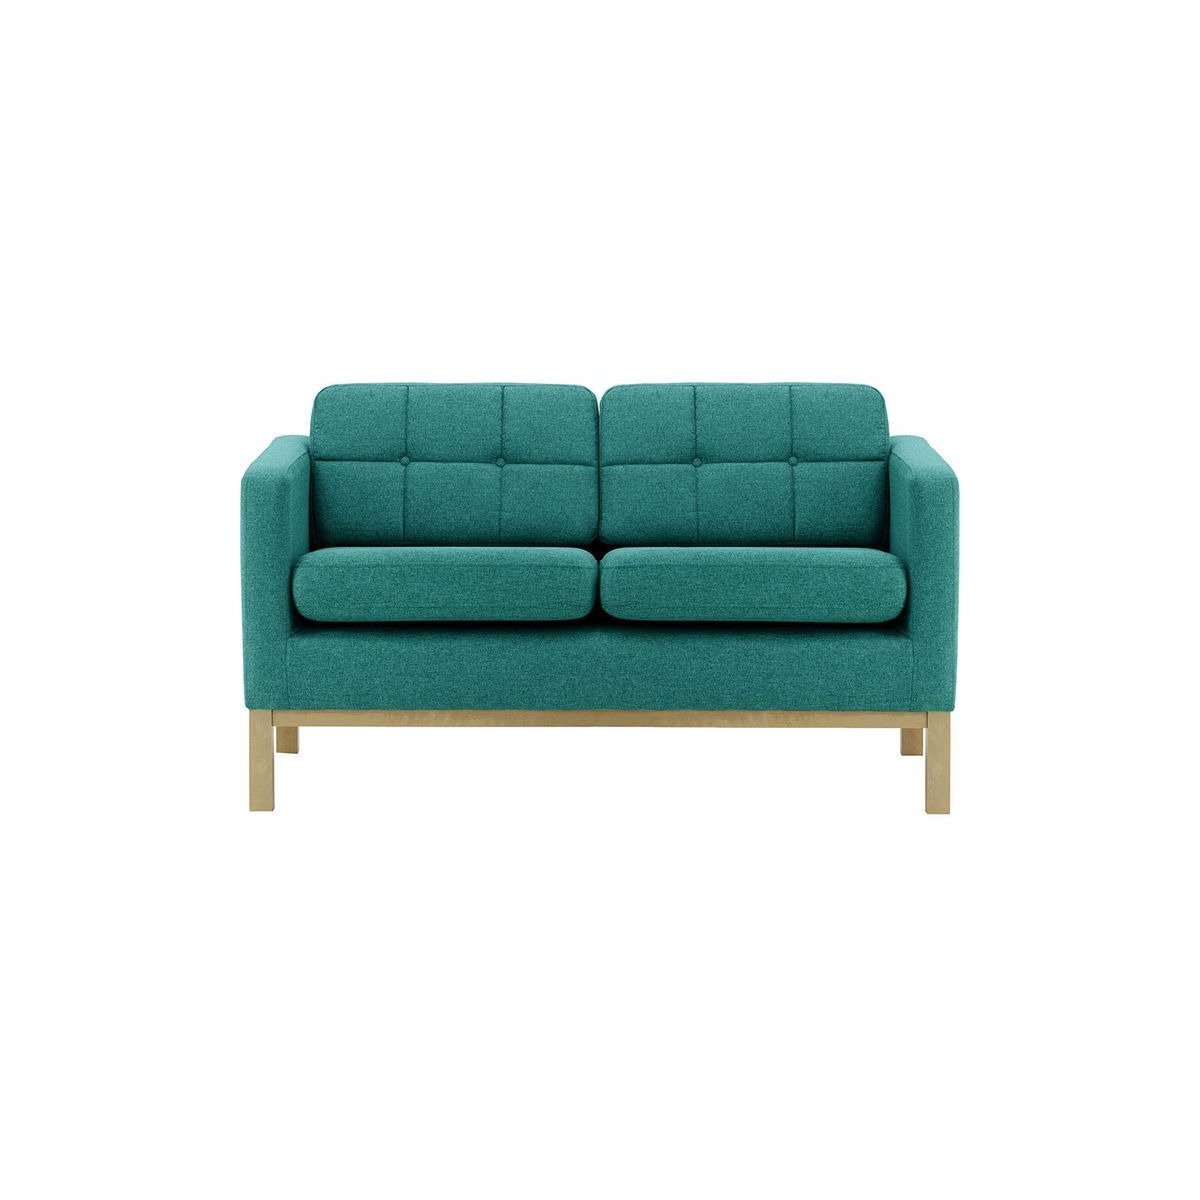 Normann 2 Seater Sofa, turquoise, Leg colour: wax black - image 1